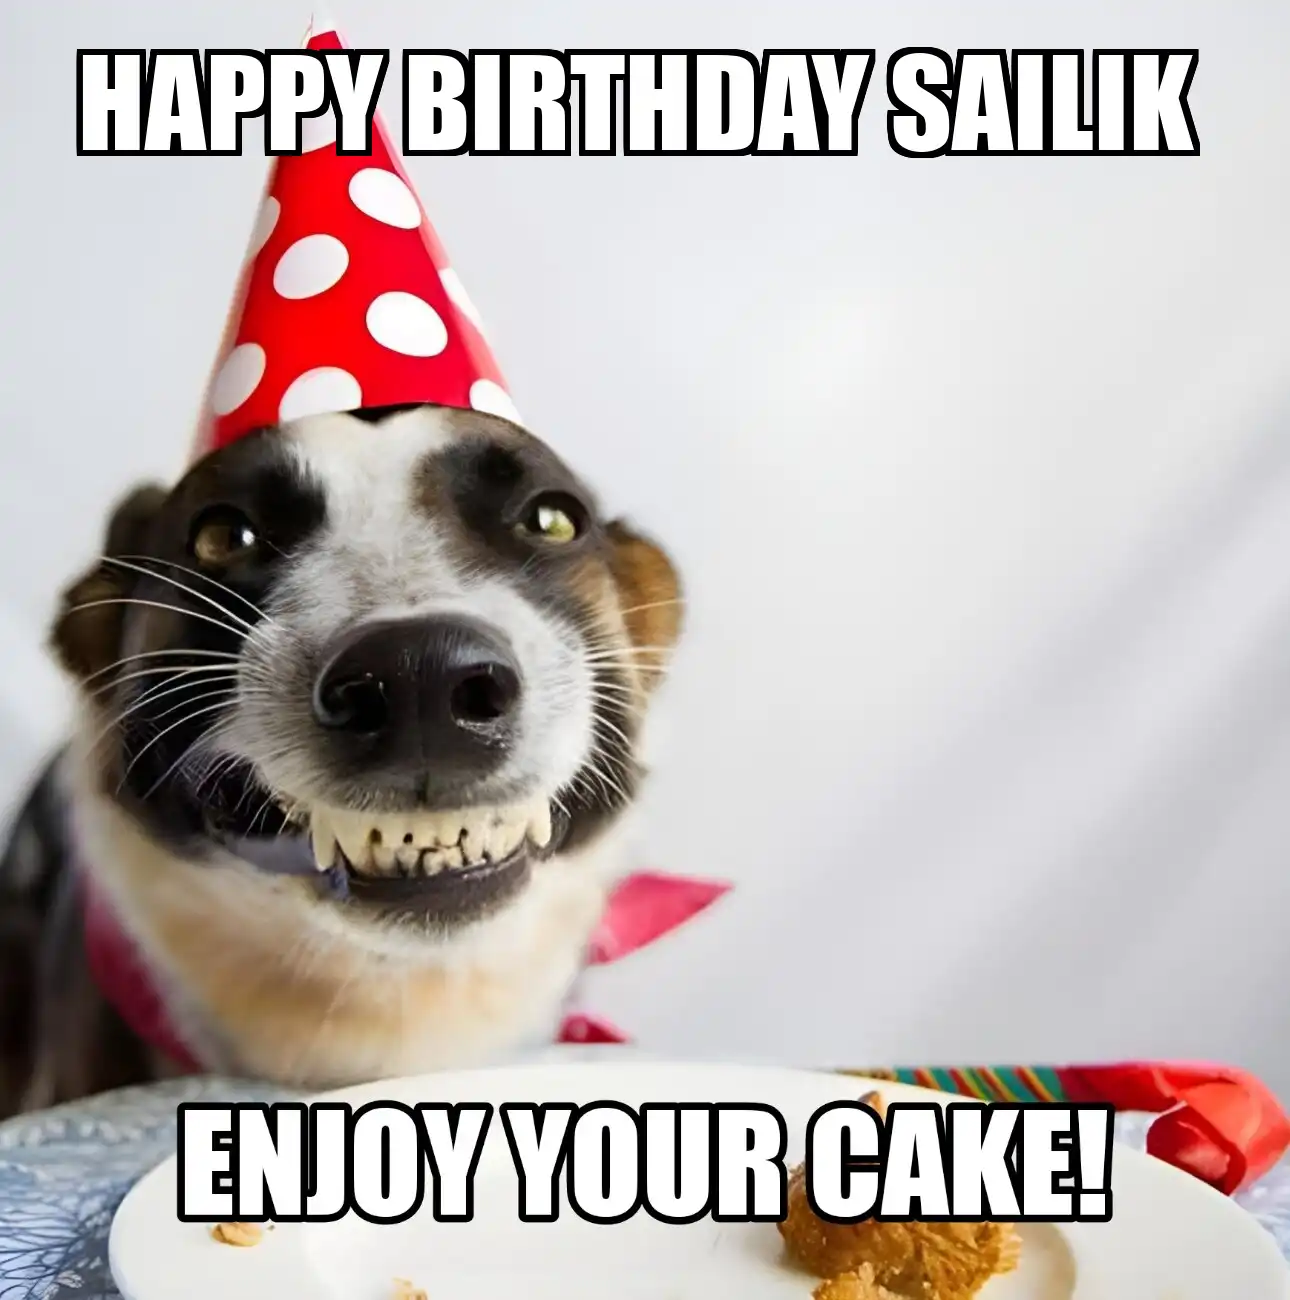 Happy Birthday Sailik Enjoy Your Cake Dog Meme